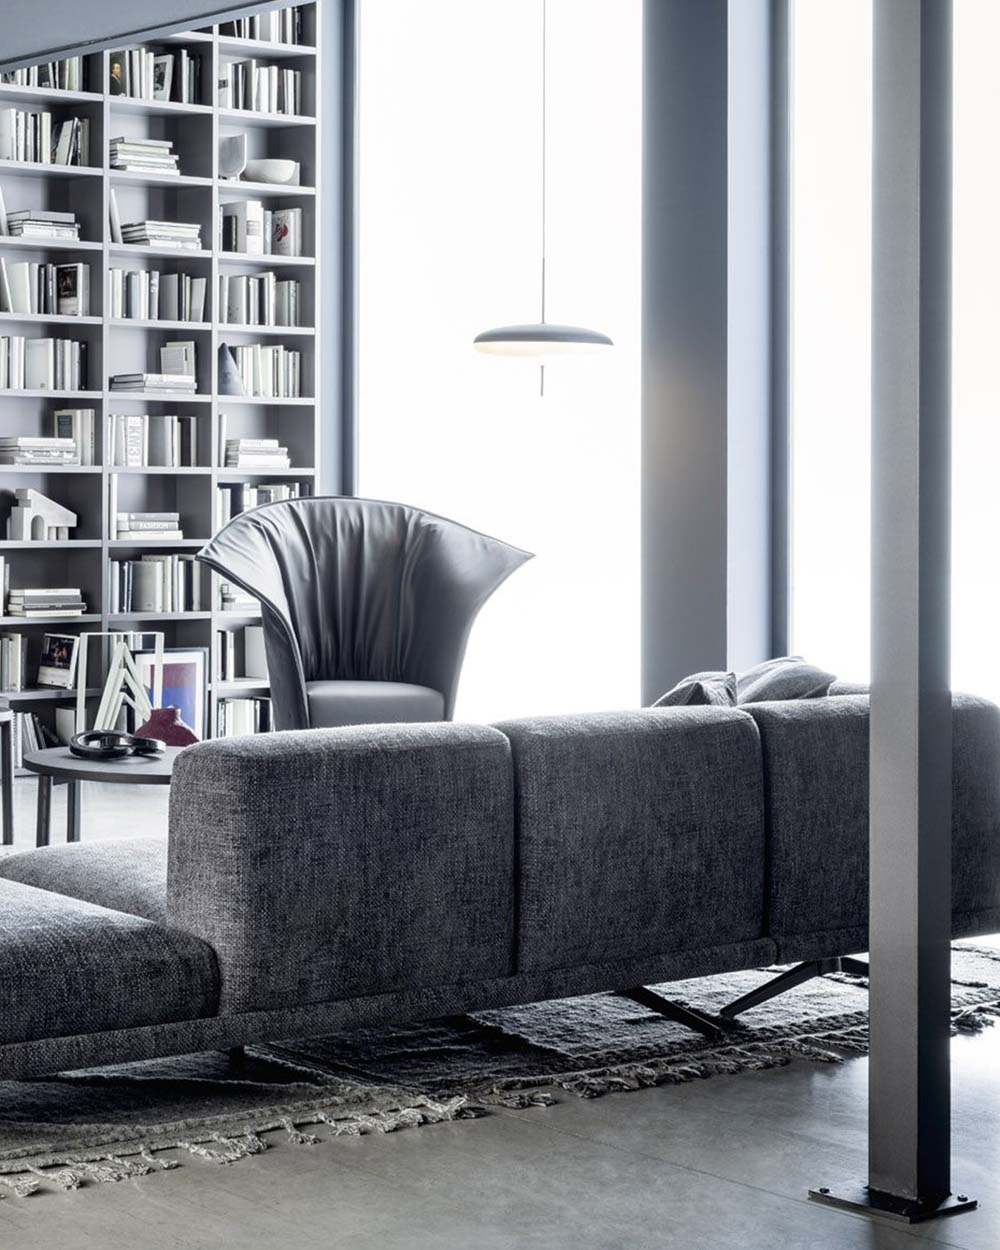 Artichoke luxury Italian modern armchair by Novamobili